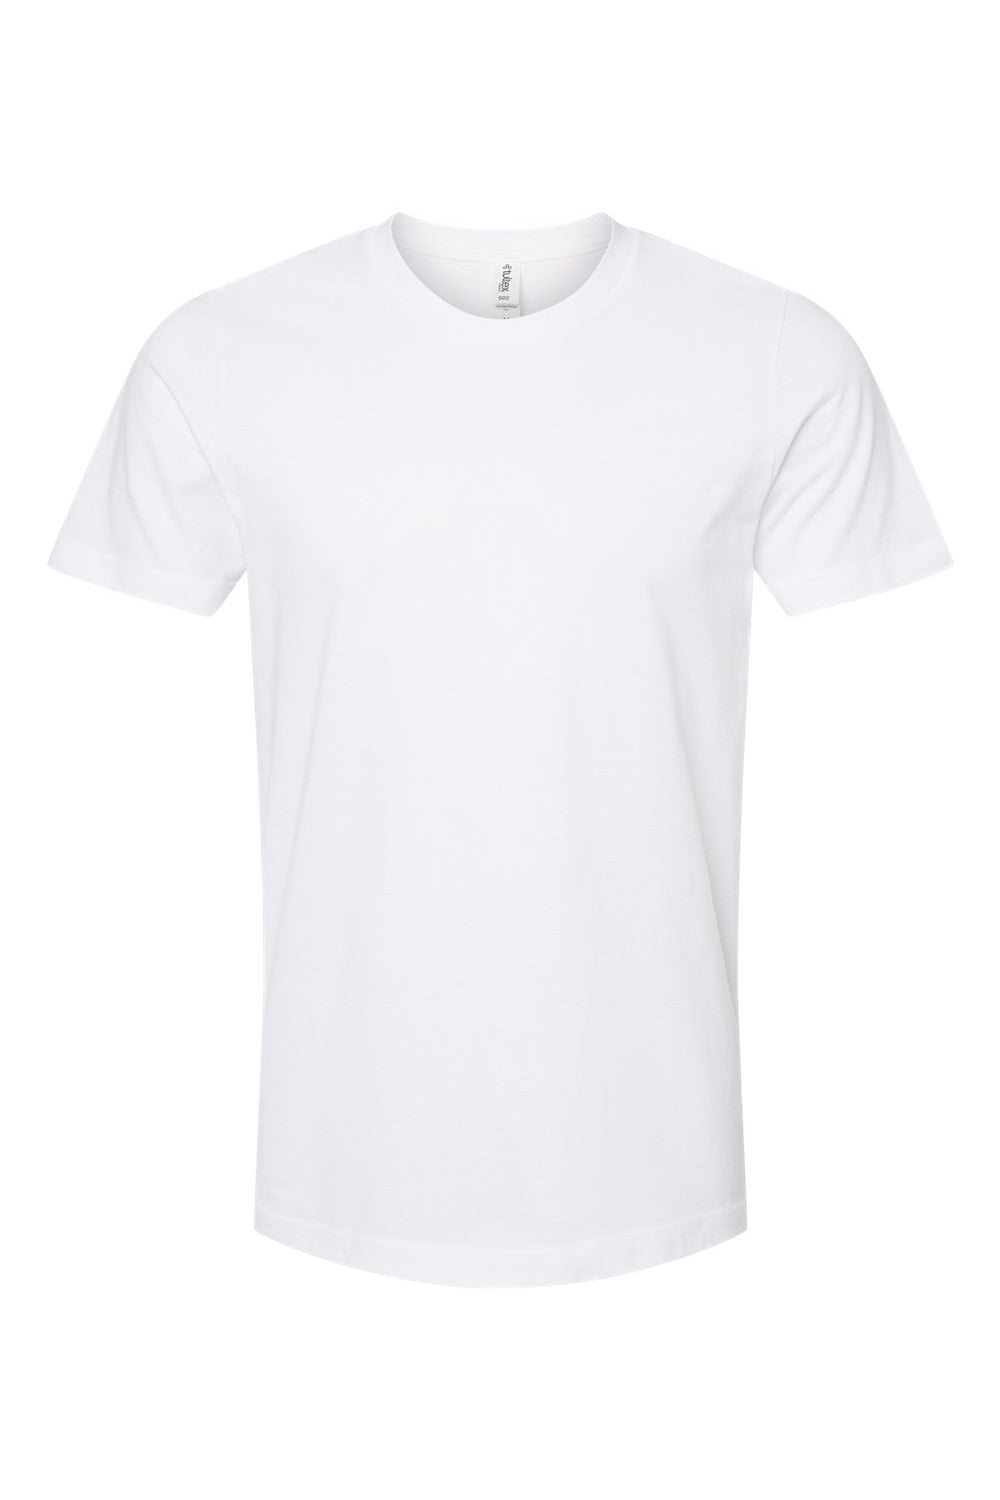 Tultex 502 Mens Premium Short Sleeve Crewneck T-Shirt White Flat Front